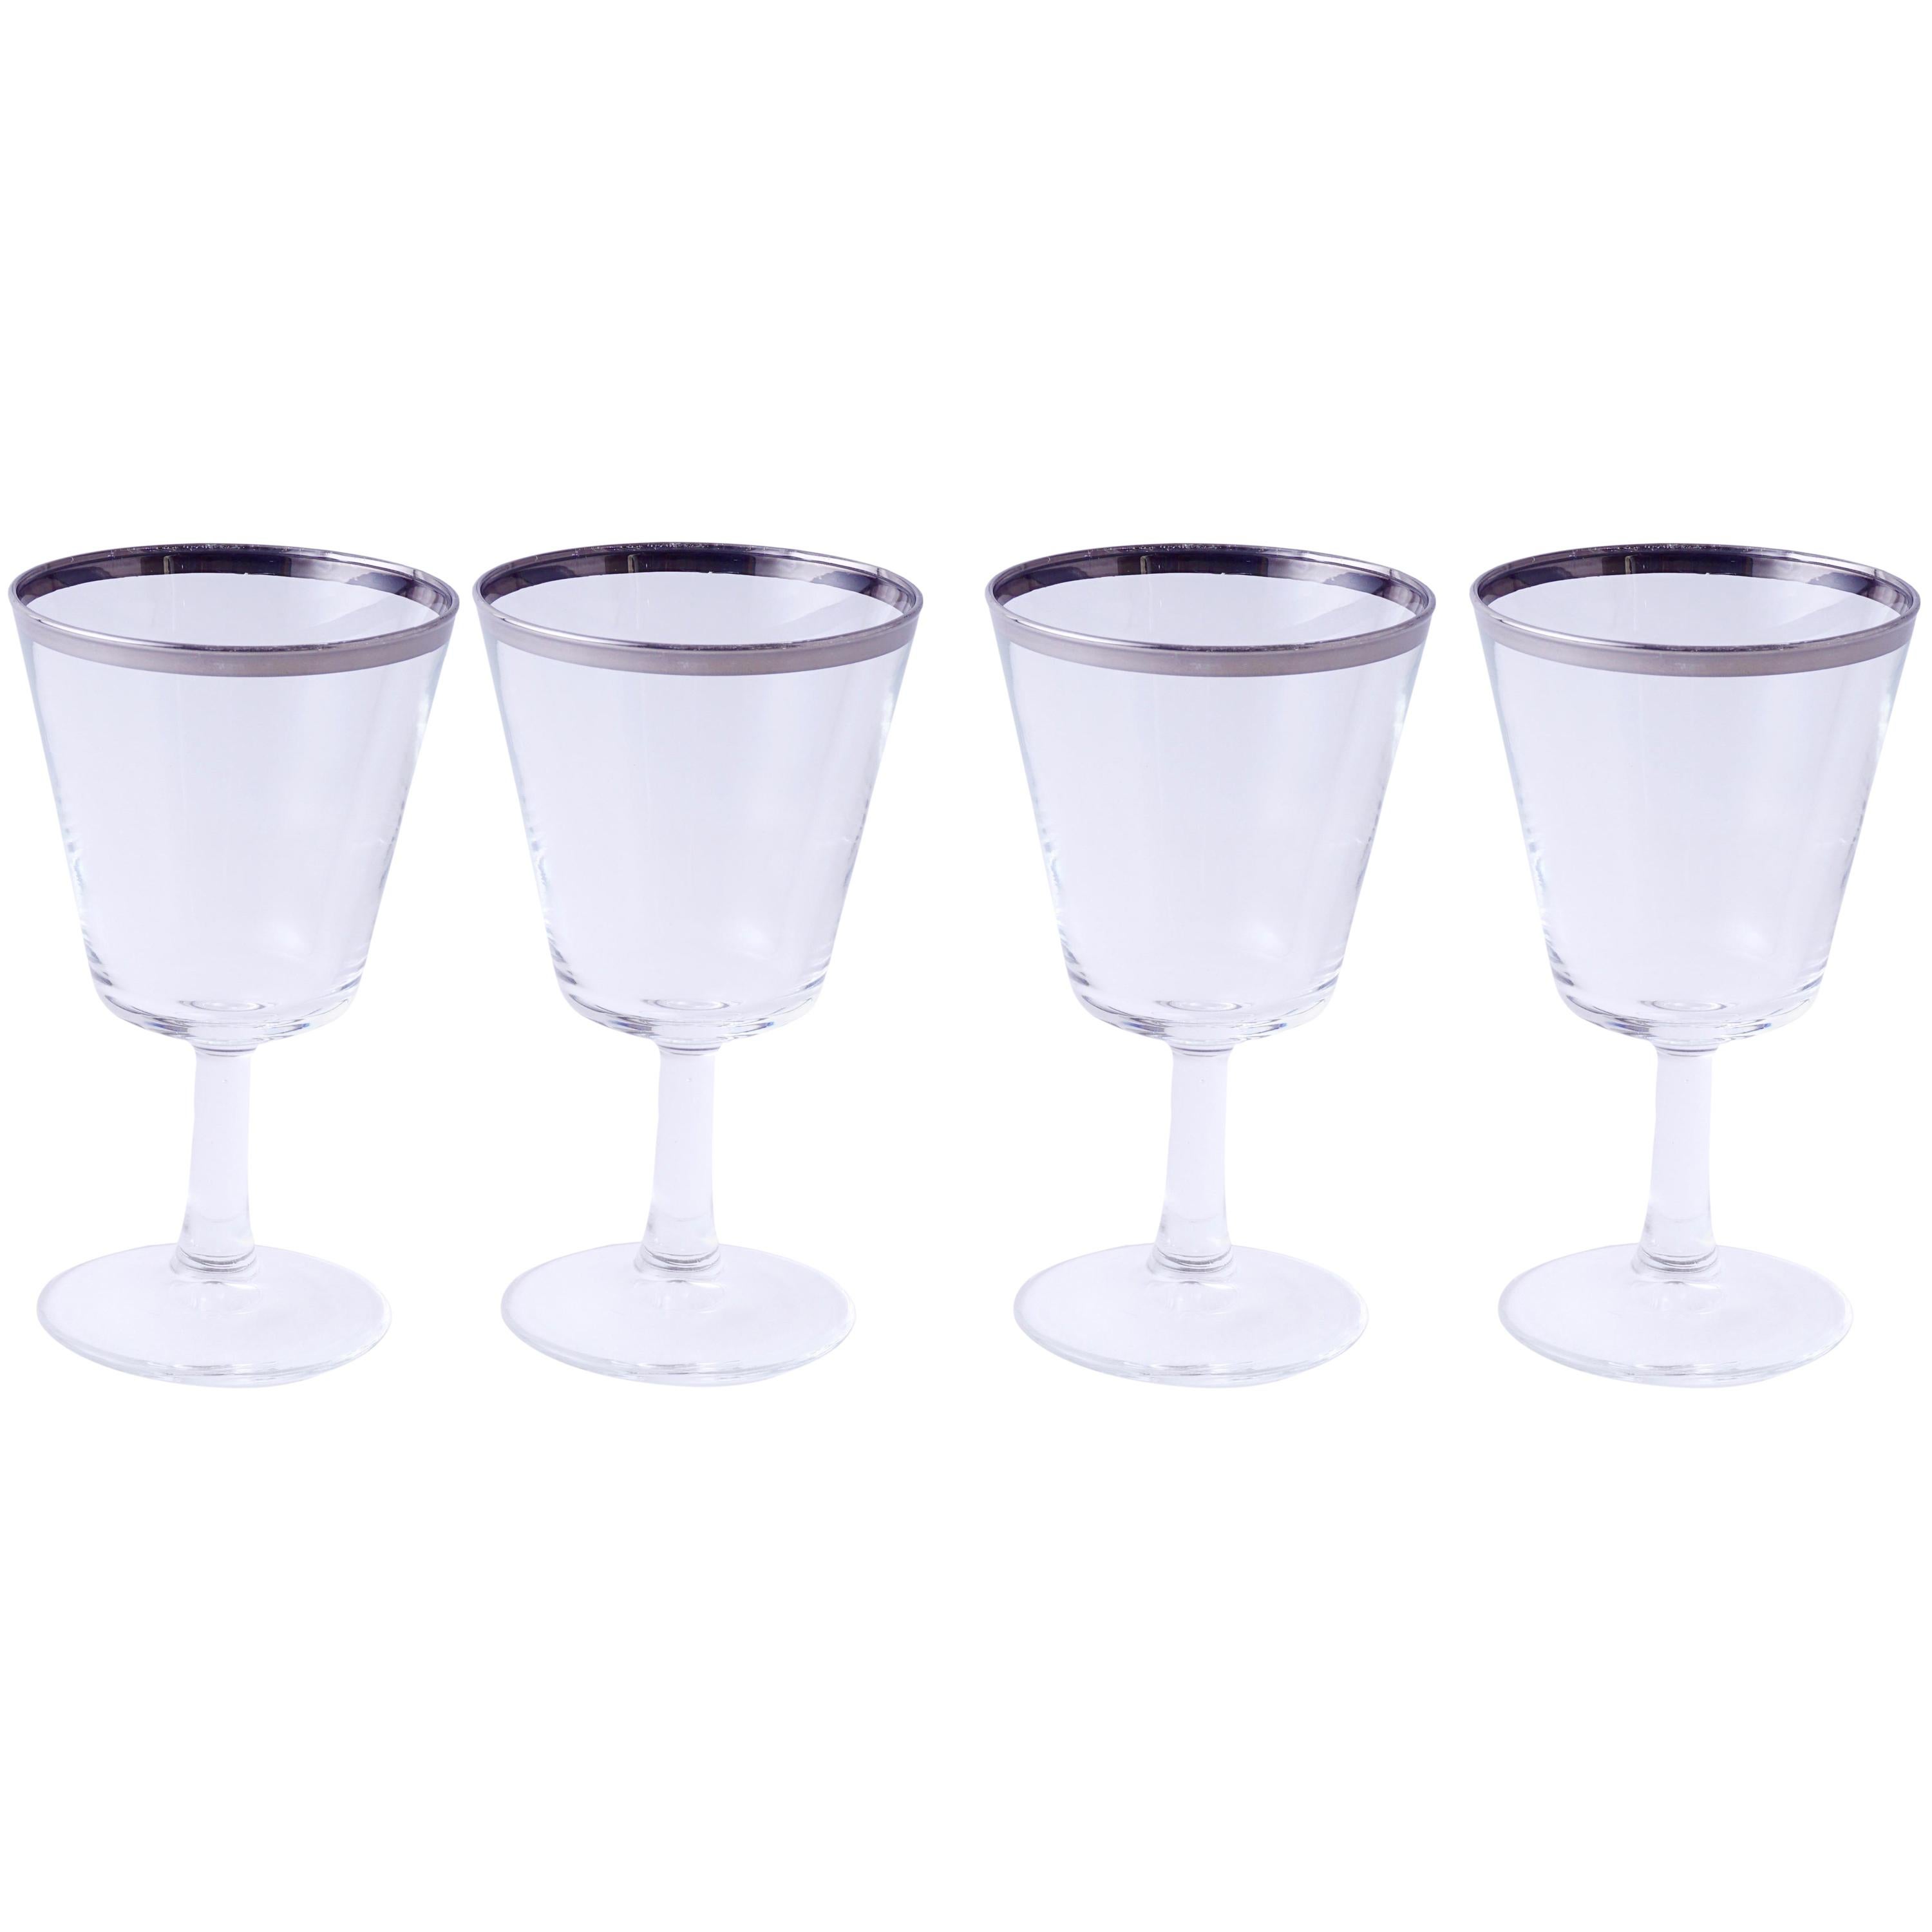 Rare Dorothy Thorpe Silver Rim Wine Glasses, Set of 4